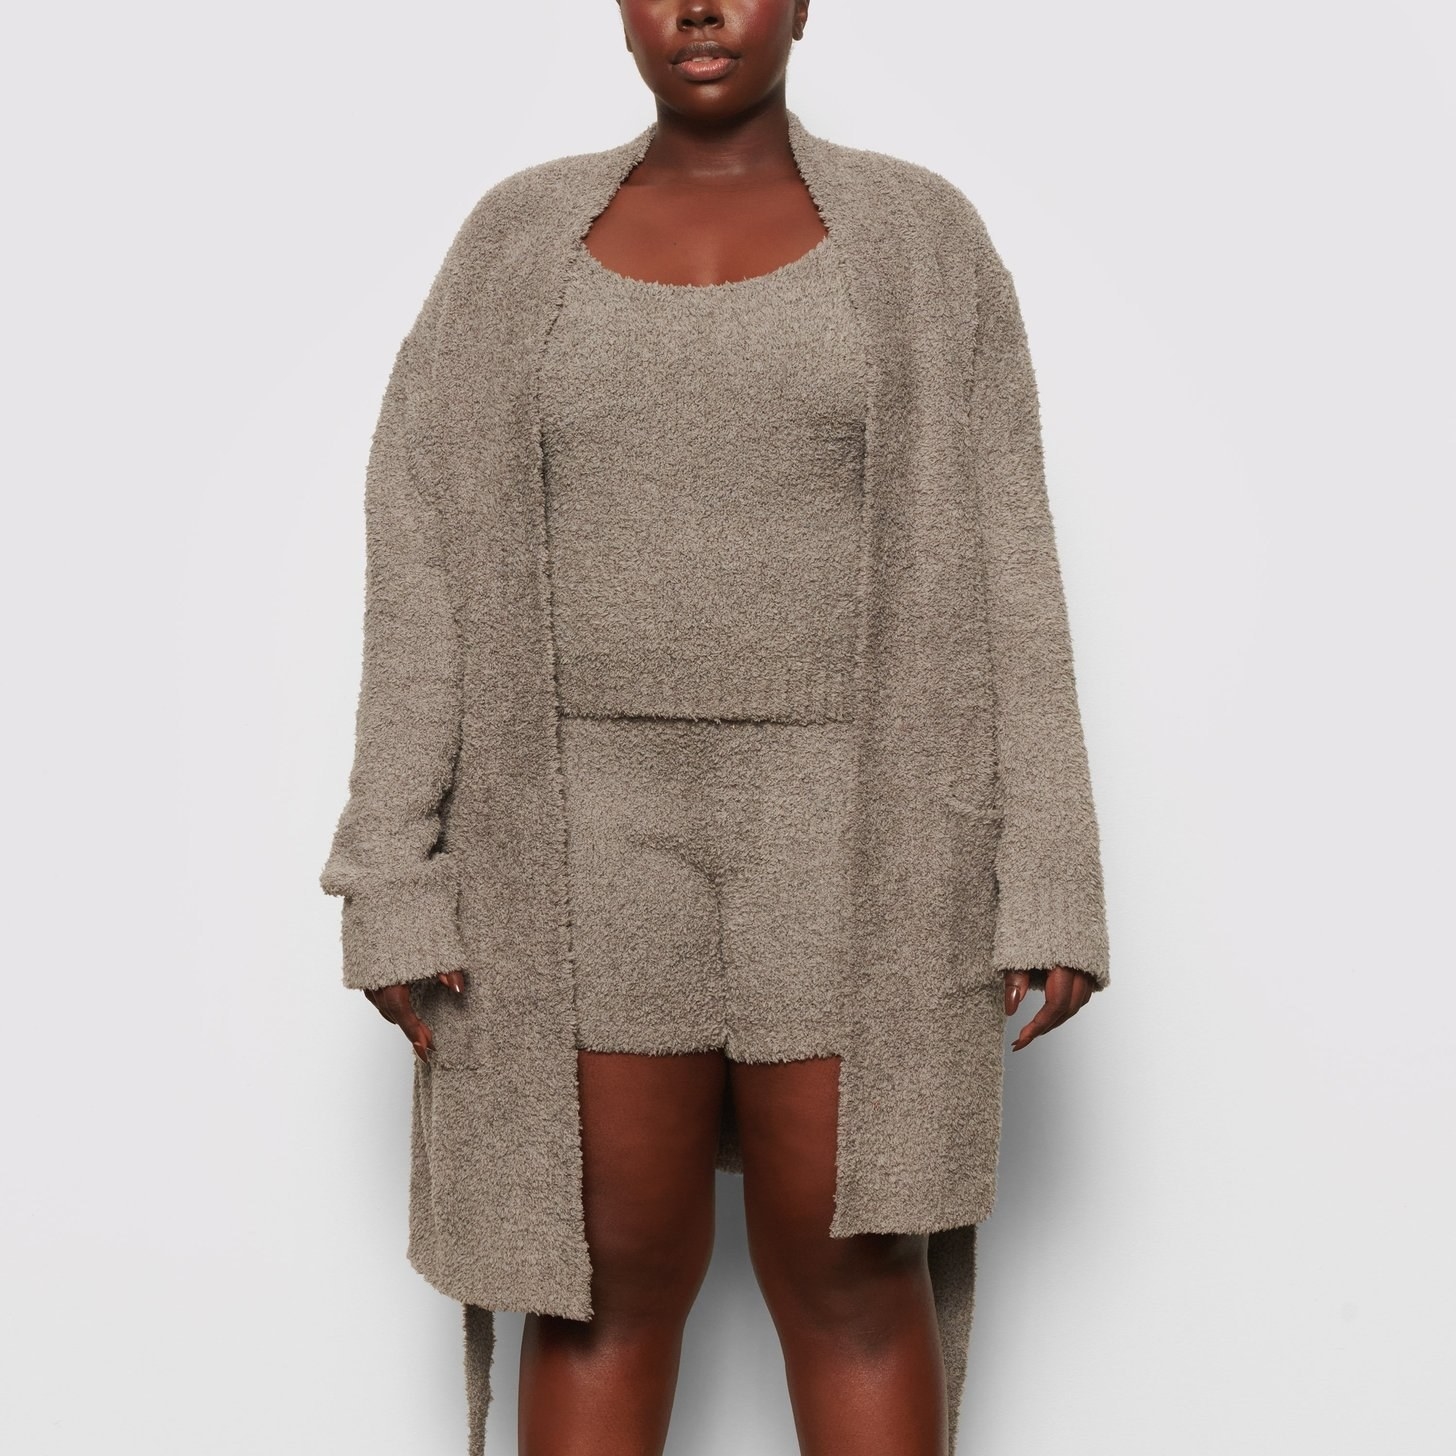 a model in the short robe in gray